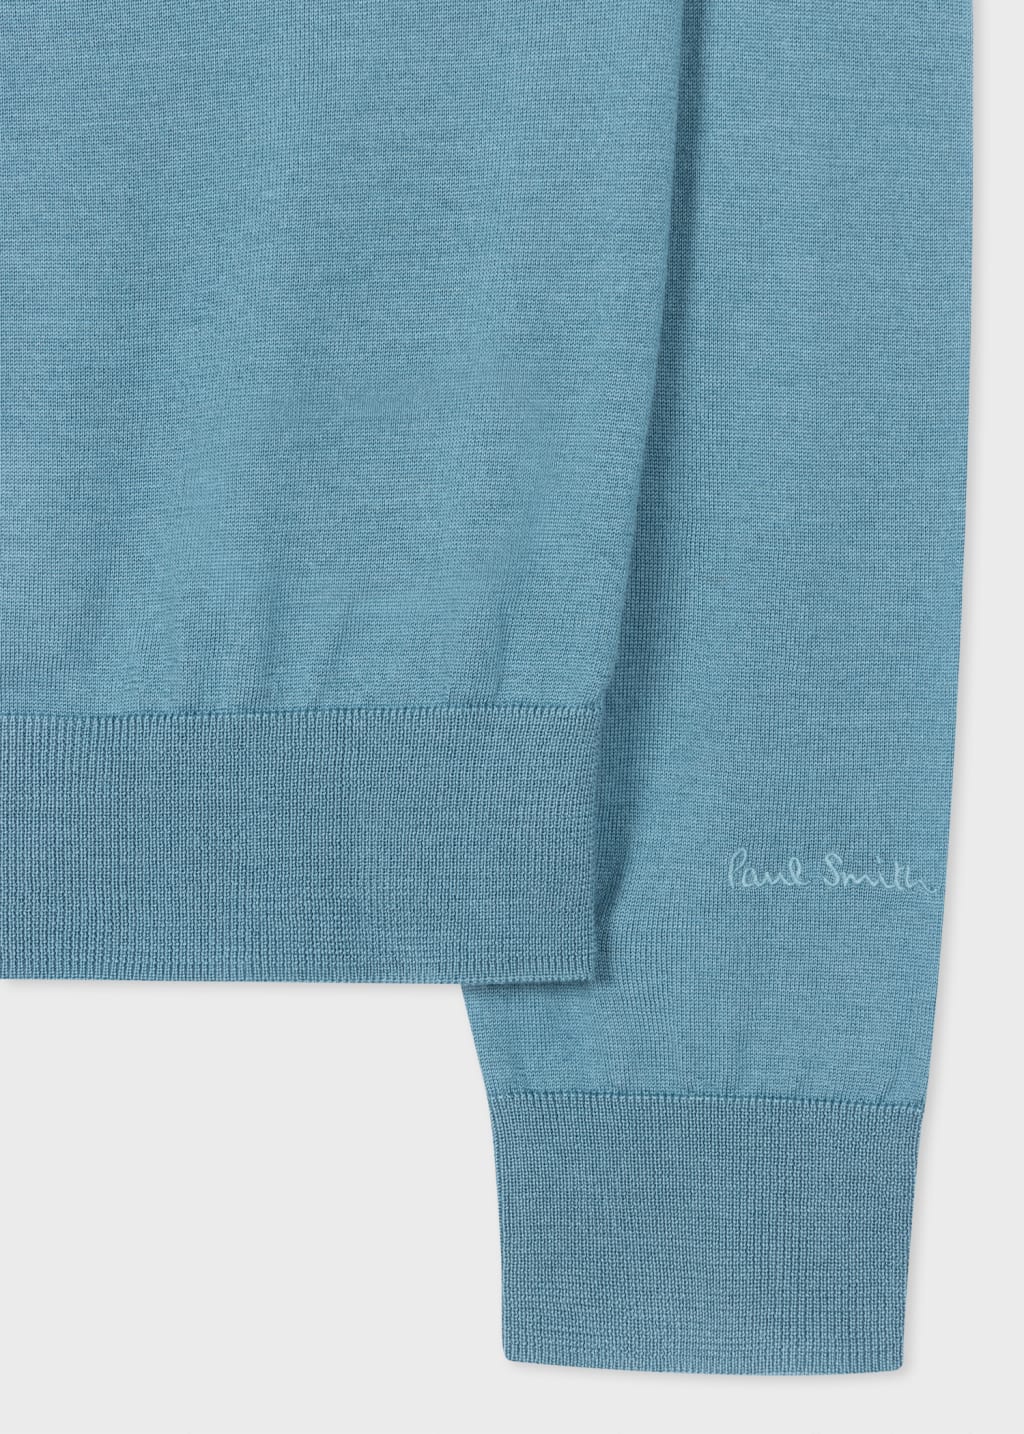 Detail View - Light Blue Half Zip Merino Wool Sweater Paul Smith